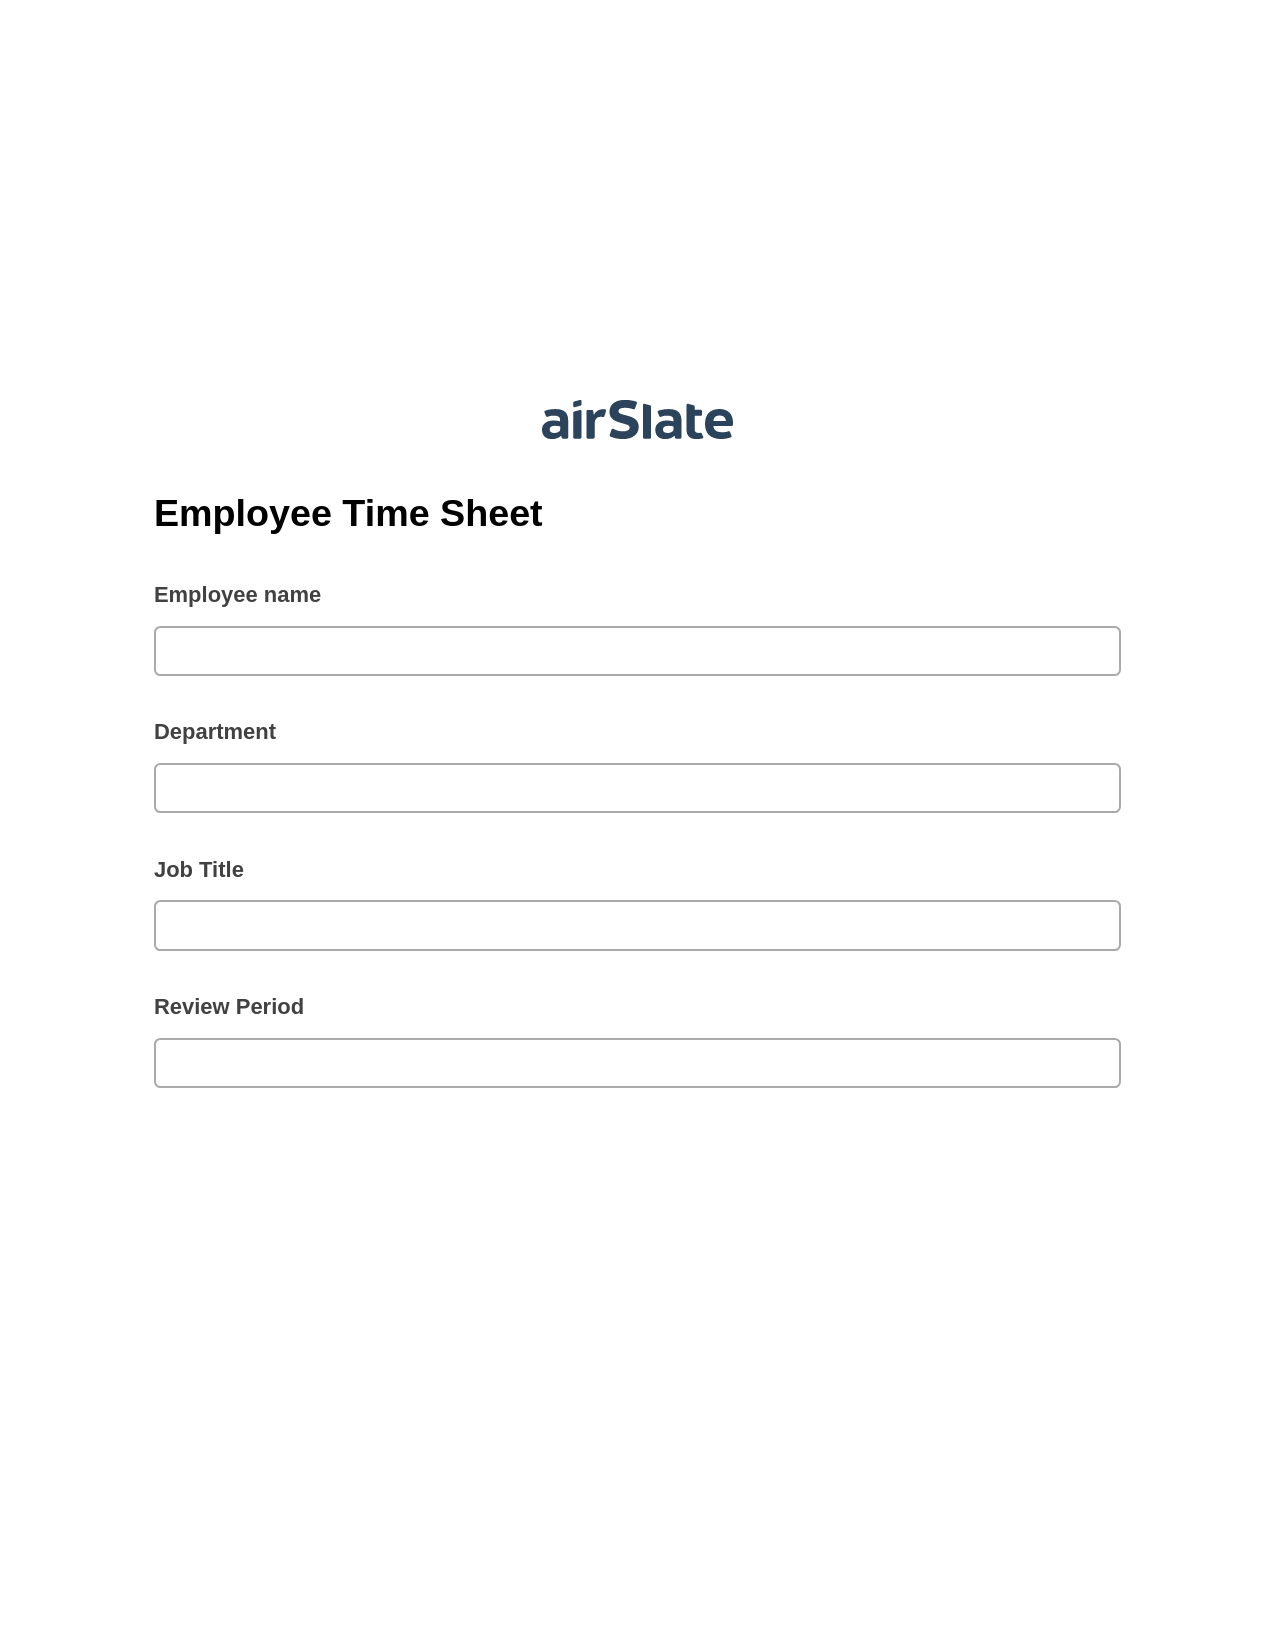 Multirole Employee Time Sheet Pre-fill Dropdowns from MySQL Bot, Create slate addon, Export to Google Sheet Bot